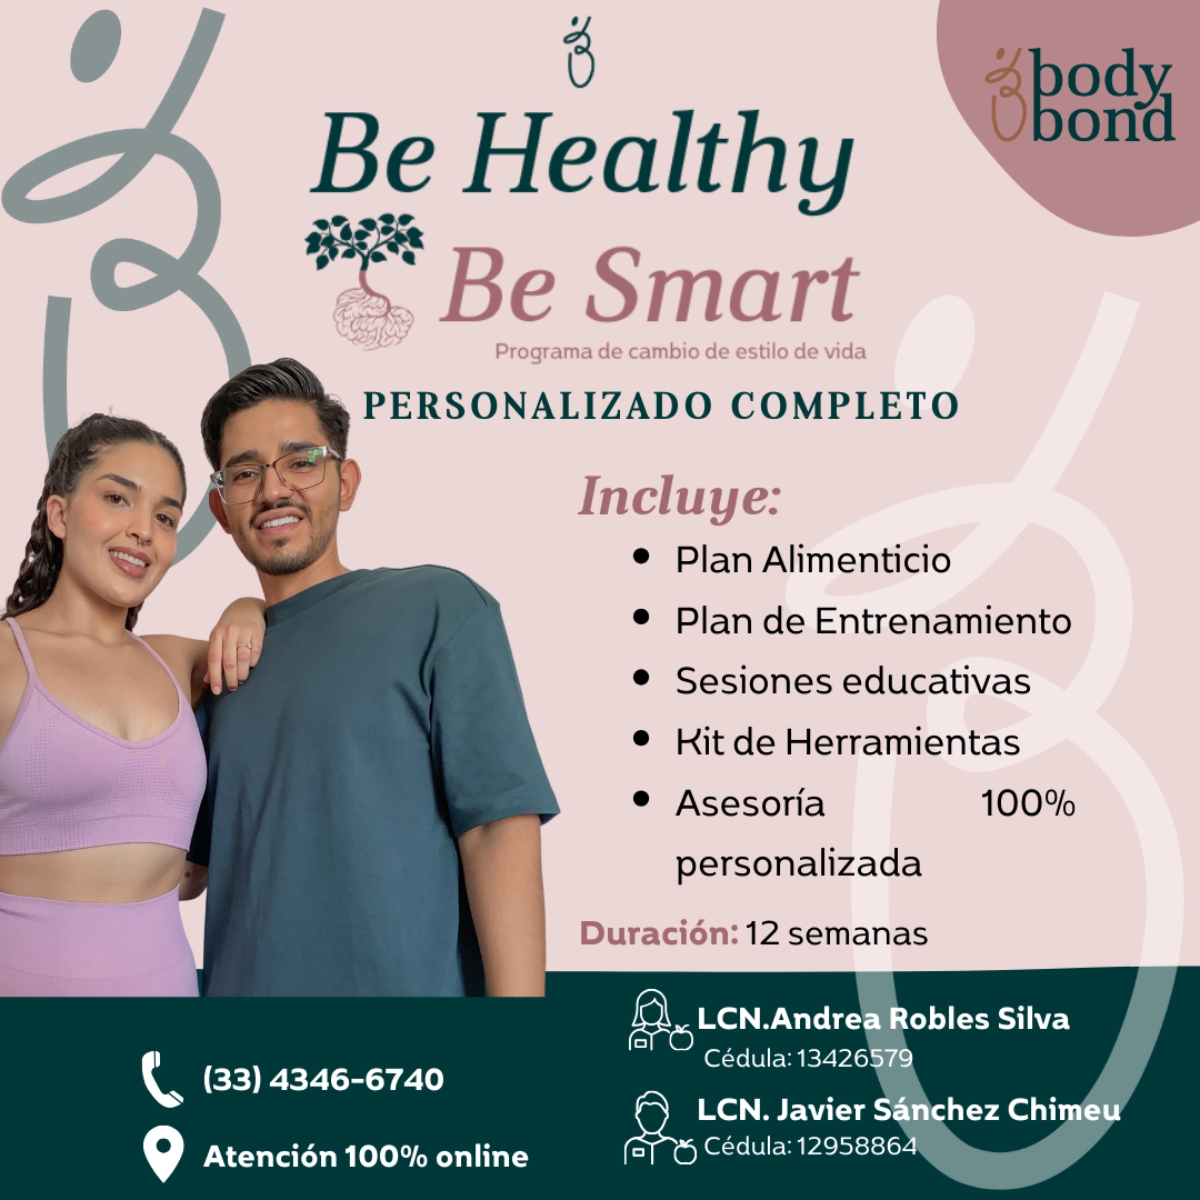 Programa Be Healthy Be Smart Personalizado Completo - Body Bond